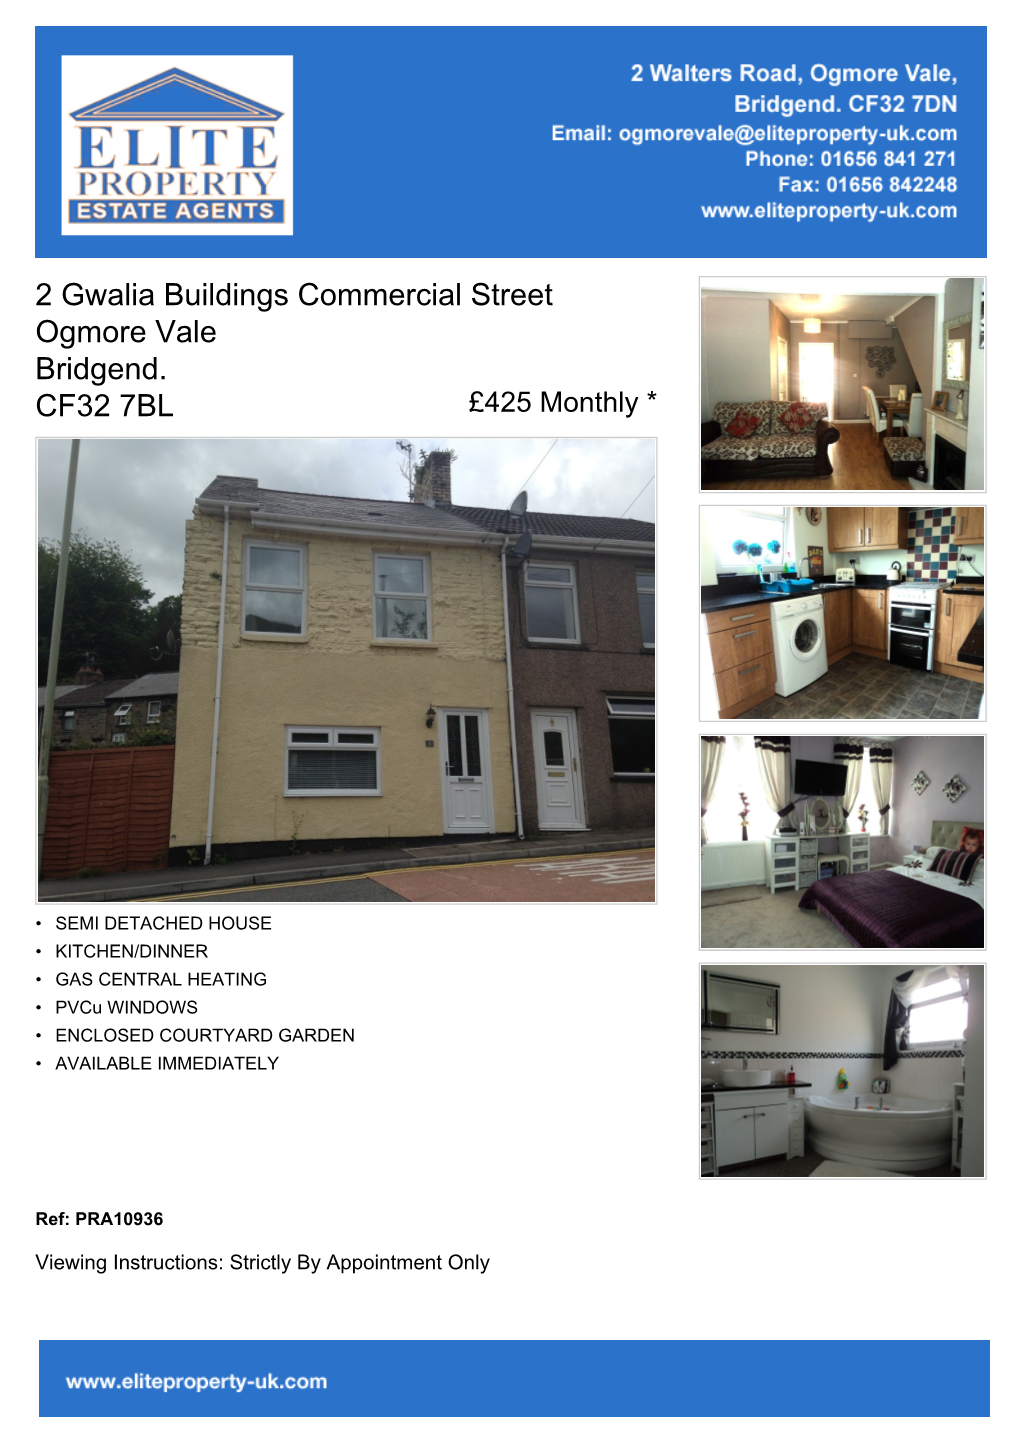 2 Gwalia Buildings Commercial Street Ogmore Vale Bridgend. CF32 7BL £425 Monthly *